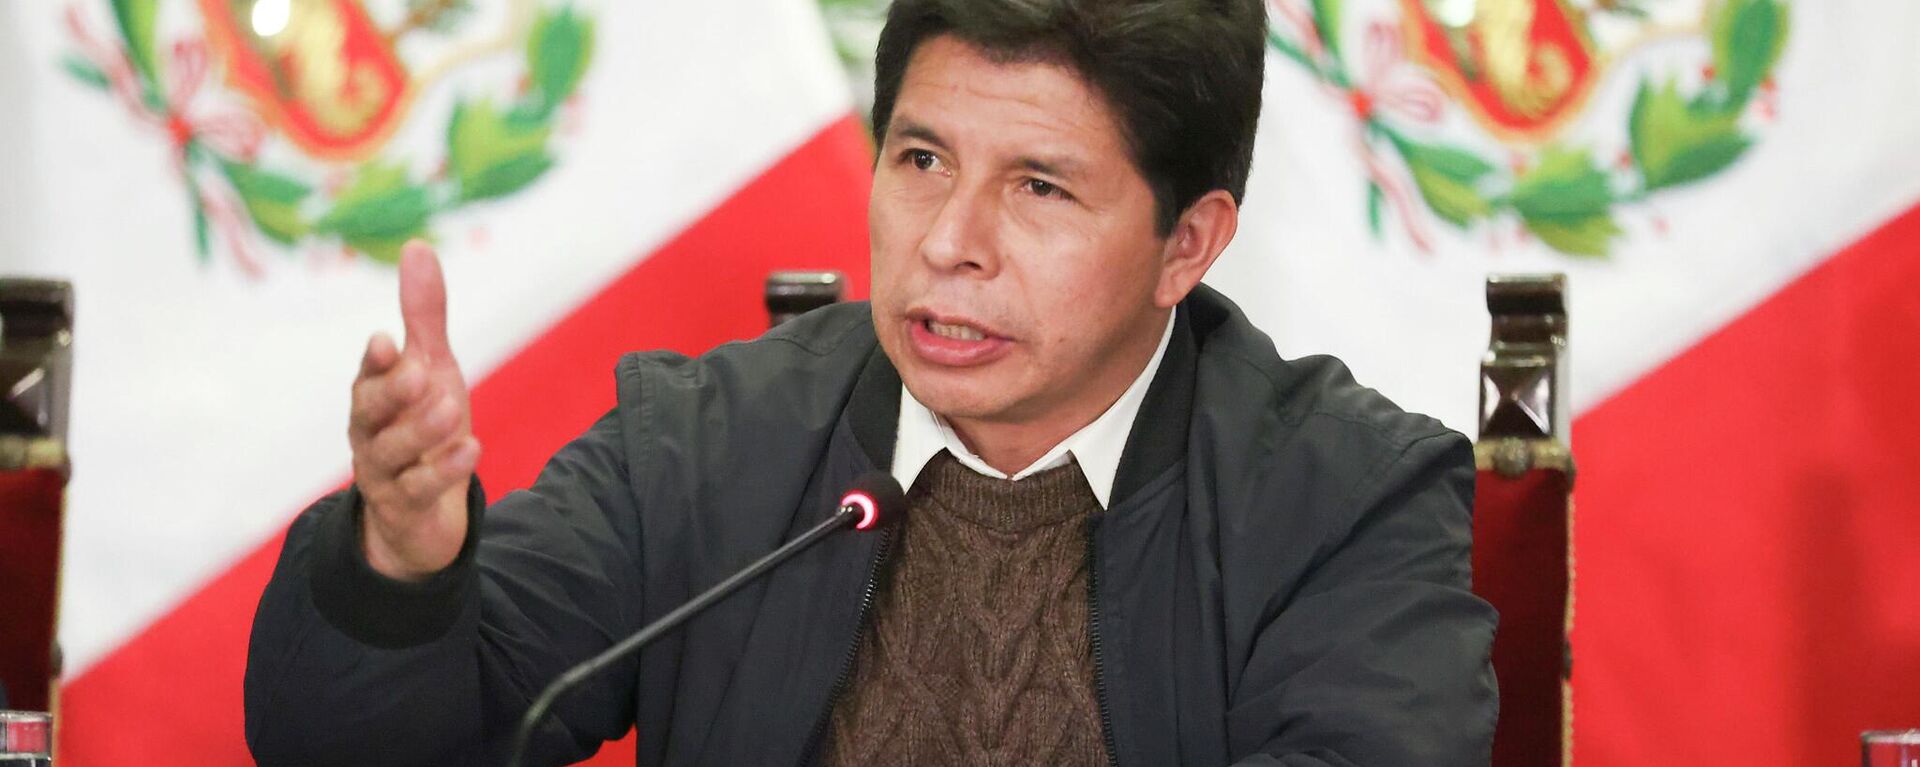 El expresidente de Perú, Pedro Castillo - Sputnik Mundo, 1920, 09.12.2022